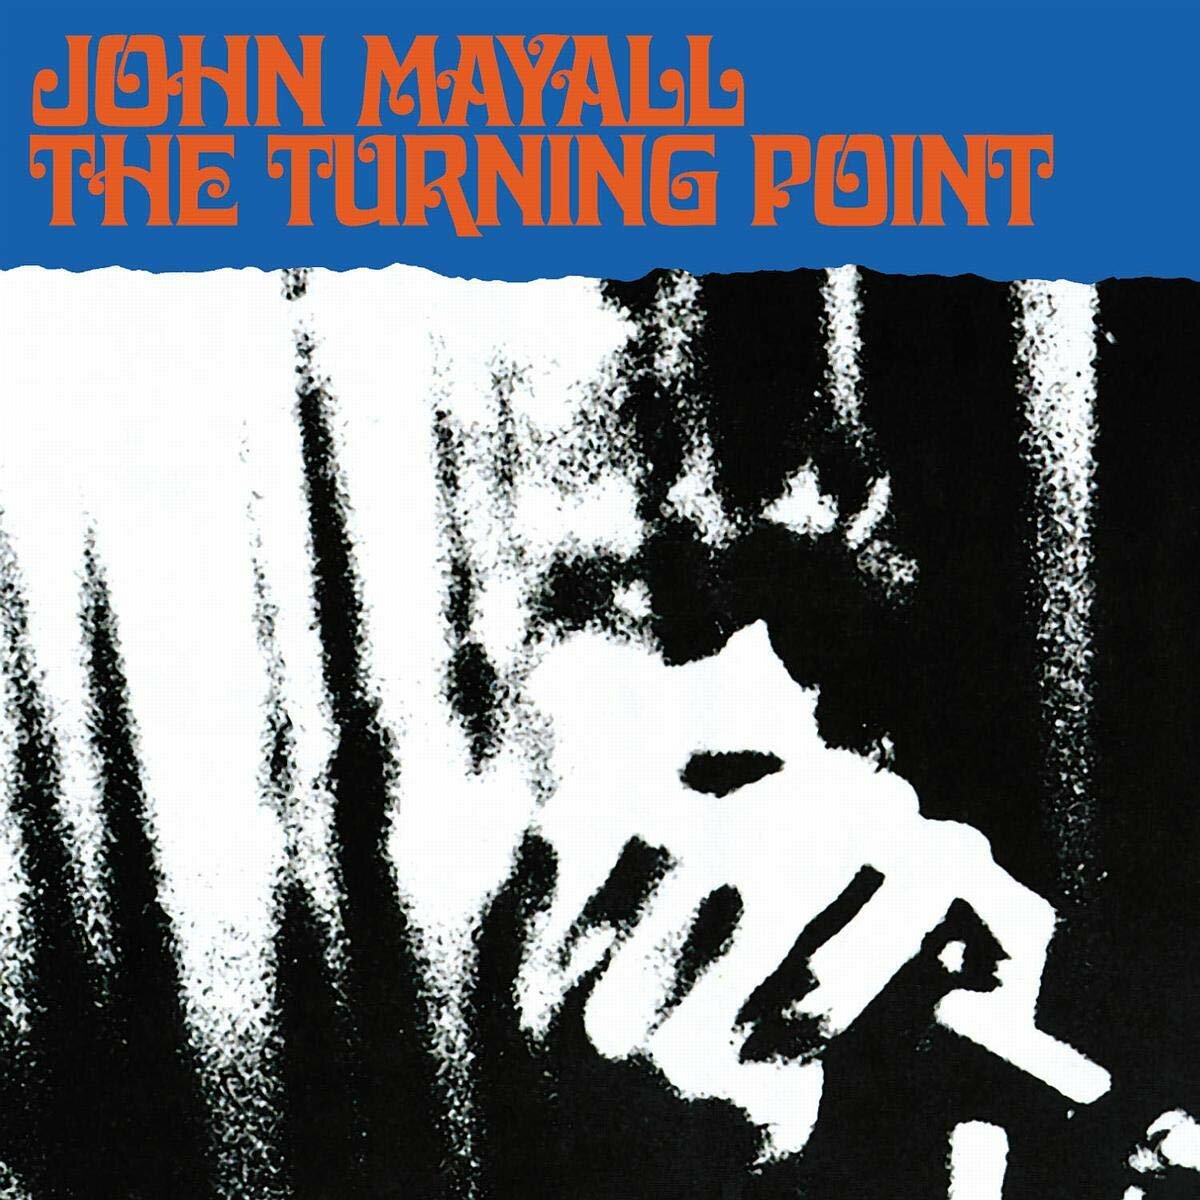 Mayall John "Виниловая пластинка Mayall John Turning Point"